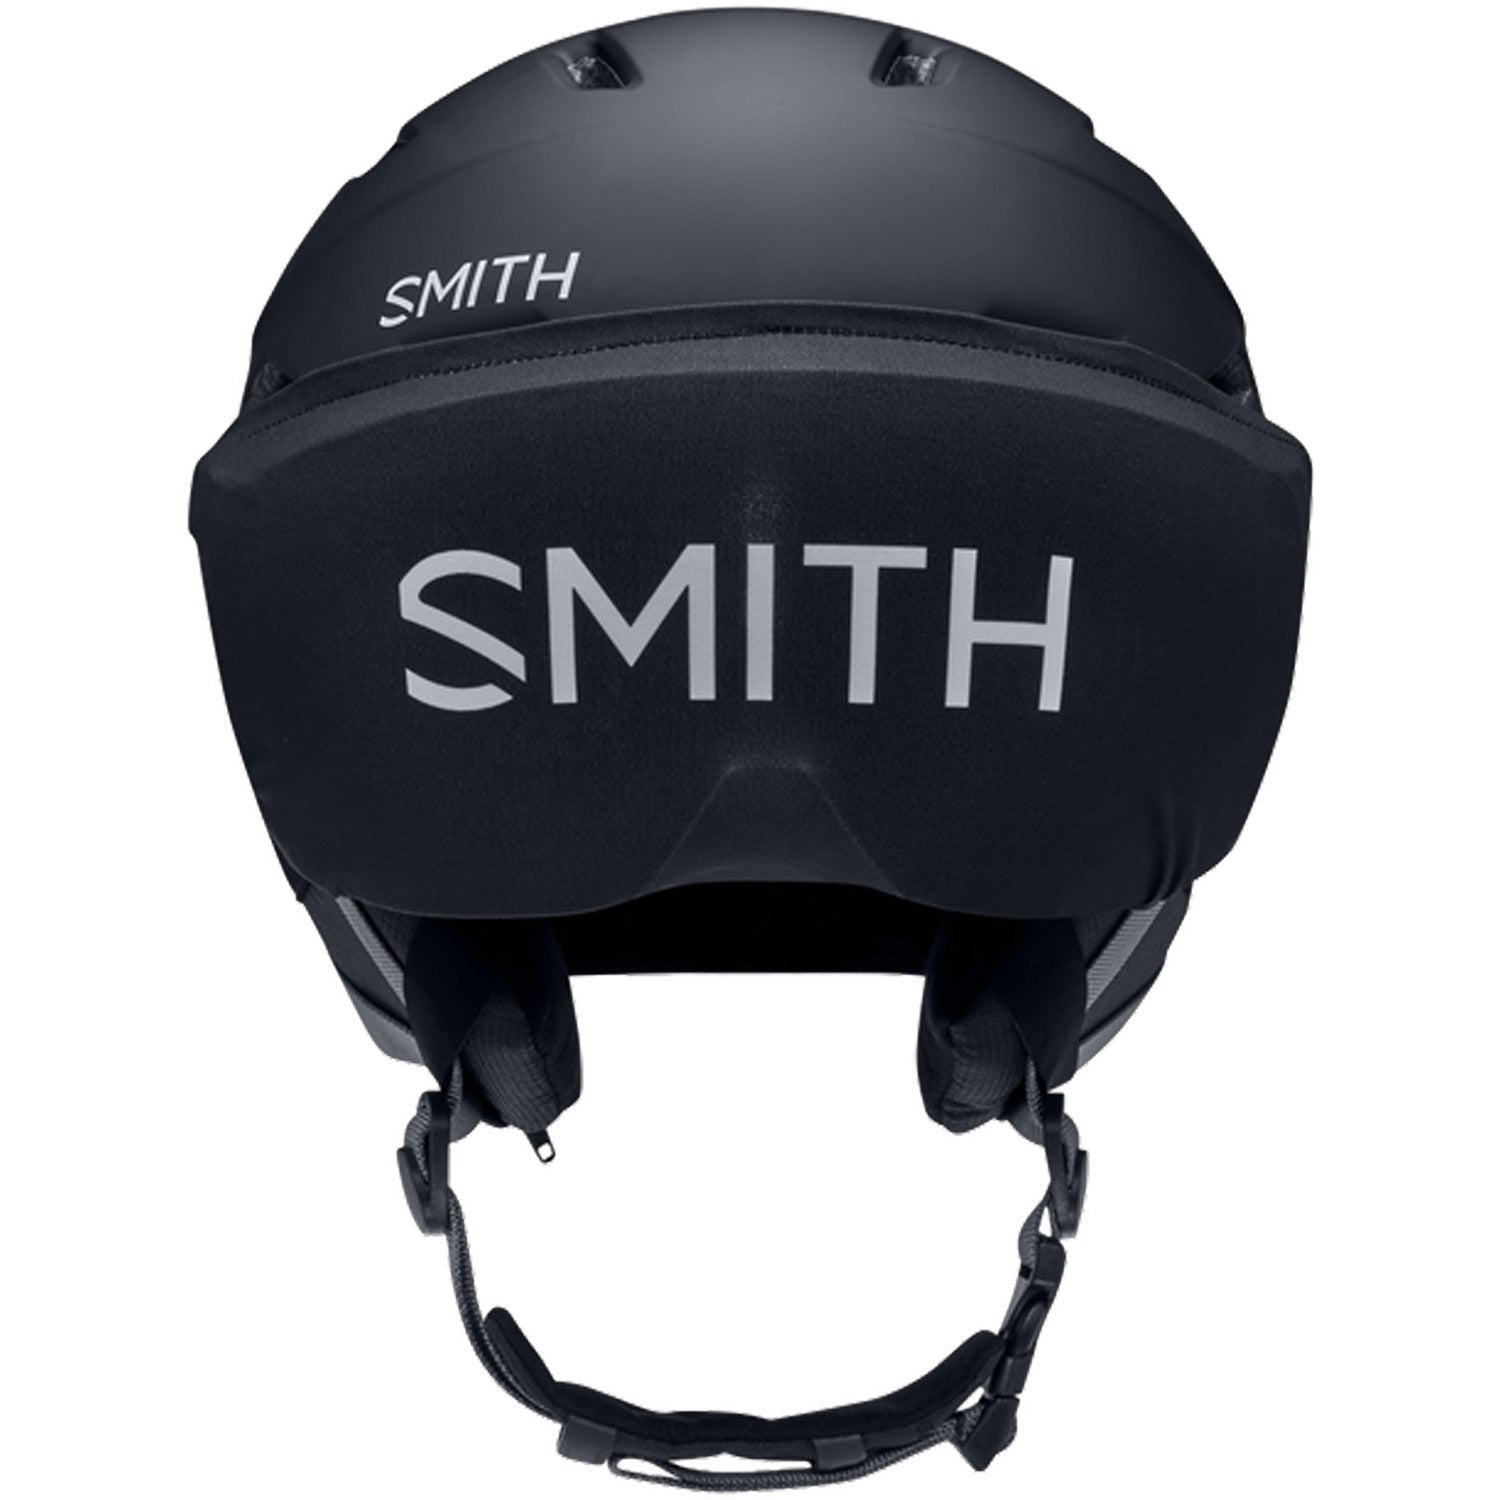 Survey MIPS Visor Snow Helmet